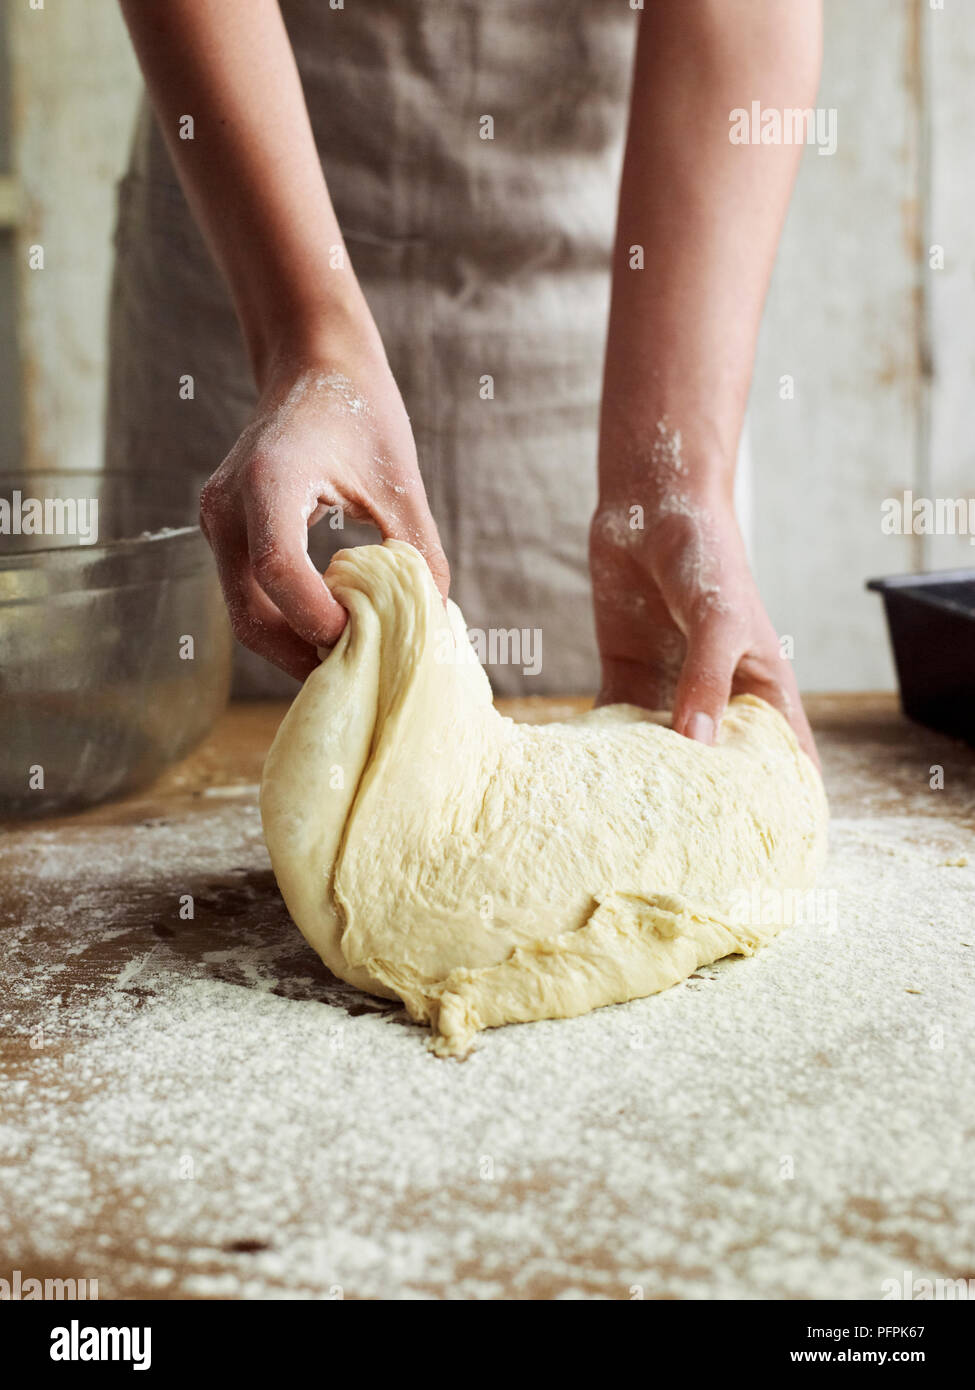 Kneading bread dough on floured surface Stock Photo